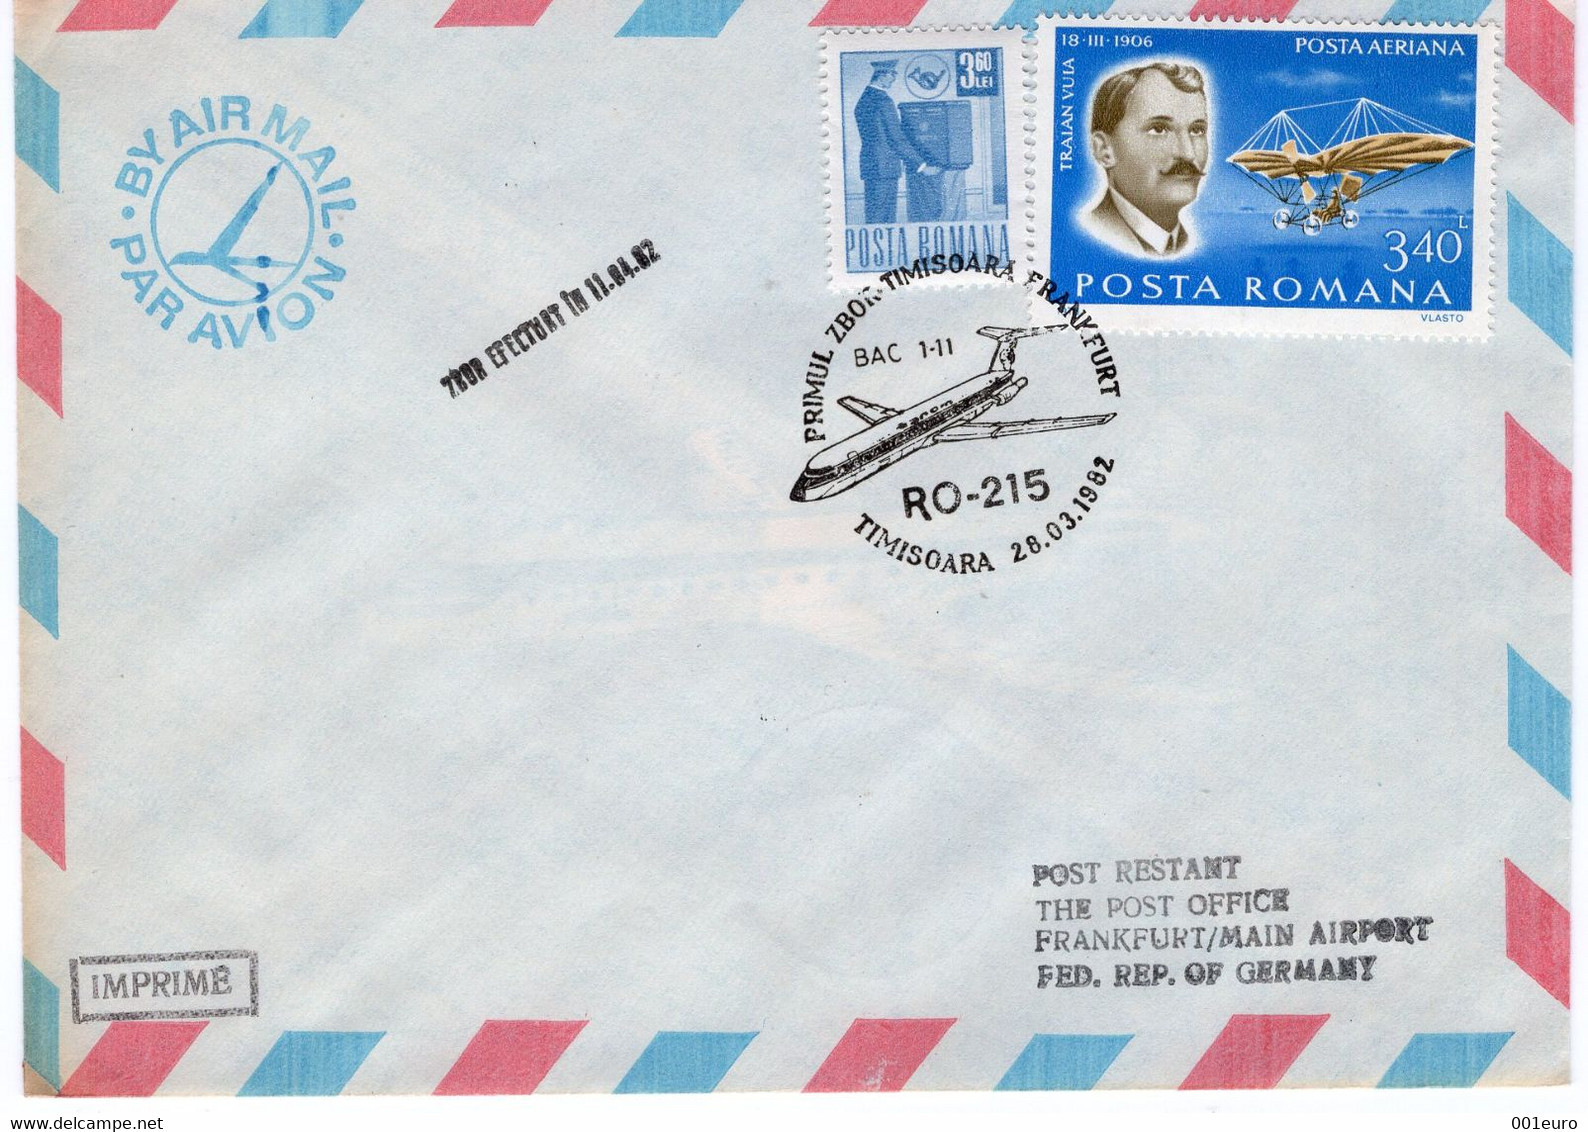 ROMANIA 1982: AEROPHILATELY - FLIGHT TIMISOARA - FRANKFURT, Illustrated Postmark On Cover  - Registered Shipping! - Marcofilie